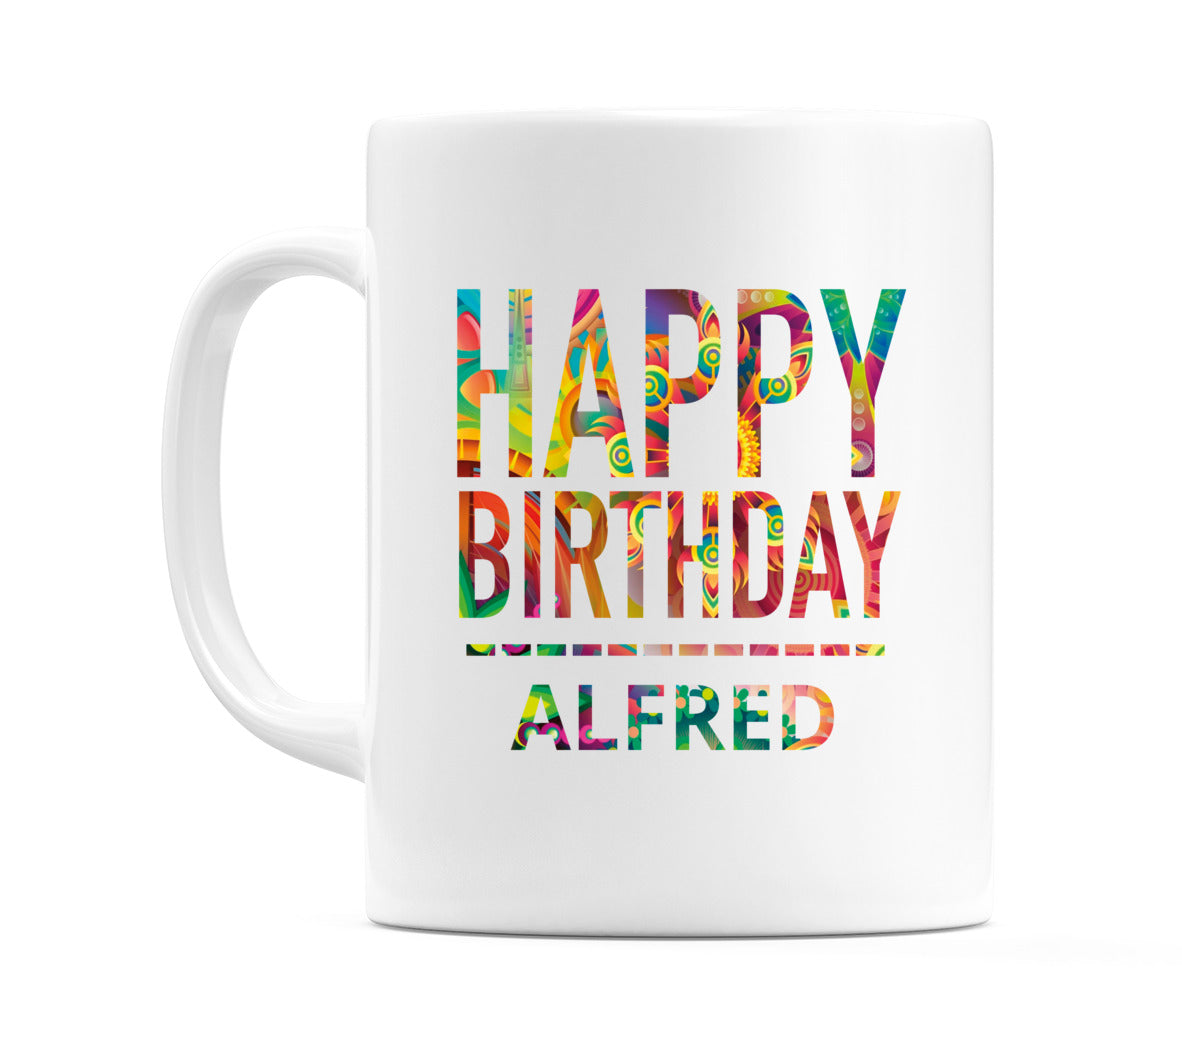 Happy Birthday Alfred (Tie Dye Effect) Mug Cup by WeDoMugs